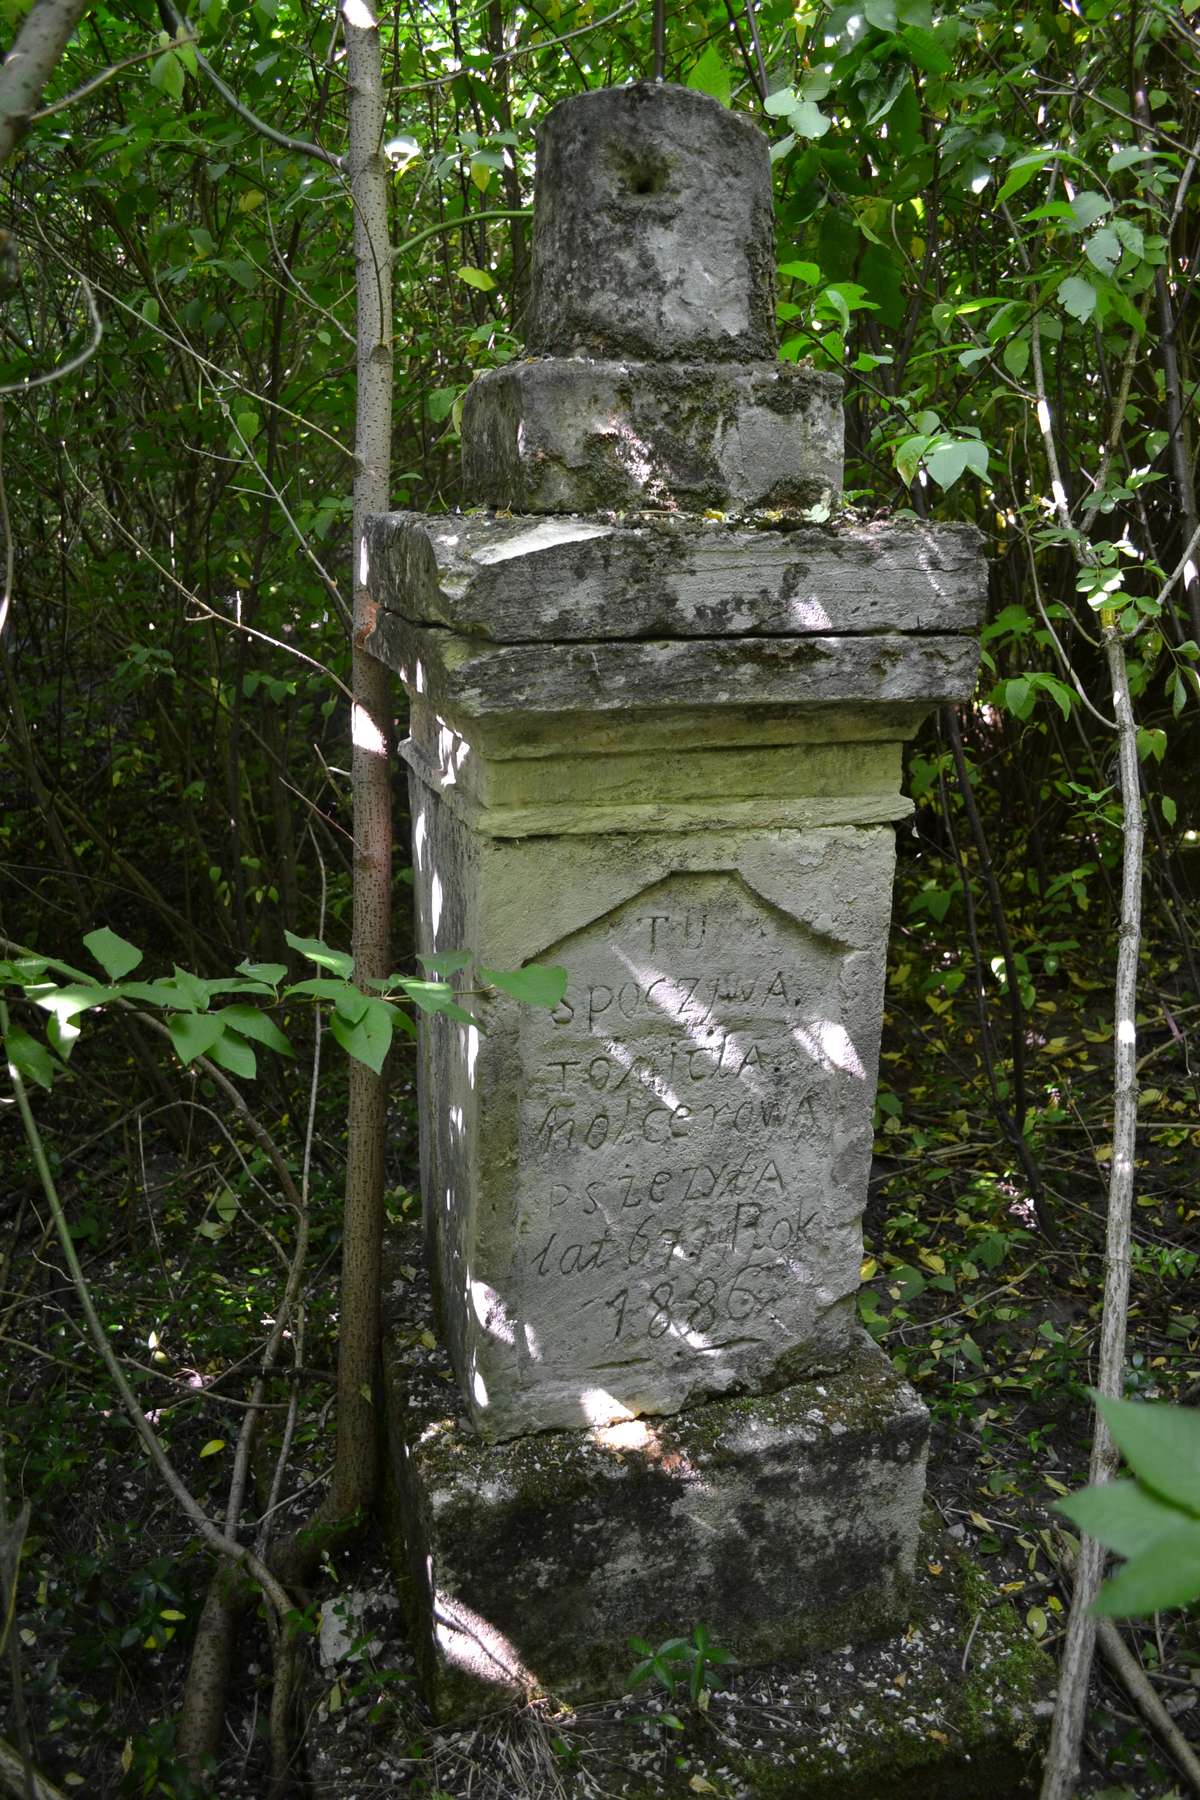 Tomira Kolceva's tombstone, Bucniowie cemetery